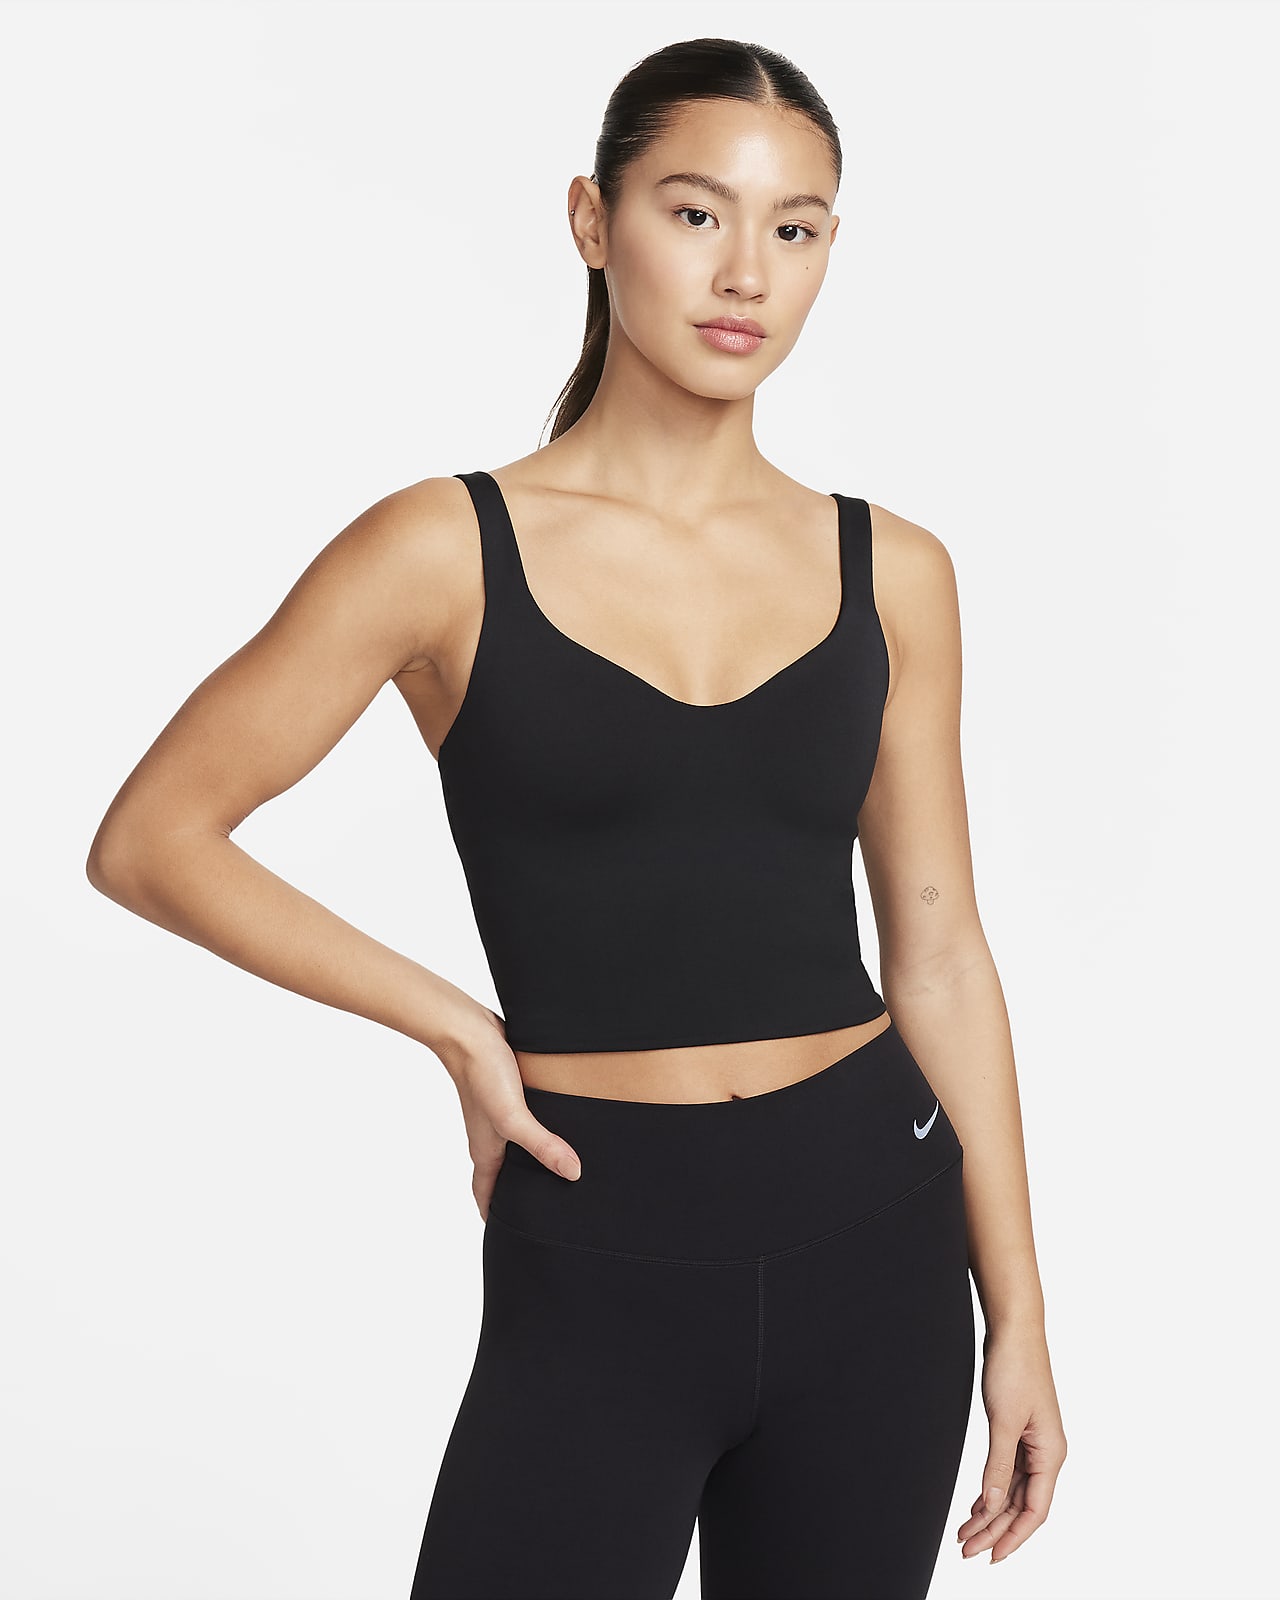 Nike Alate 女款輕度支撐型襯墊運動內衣式背心上衣